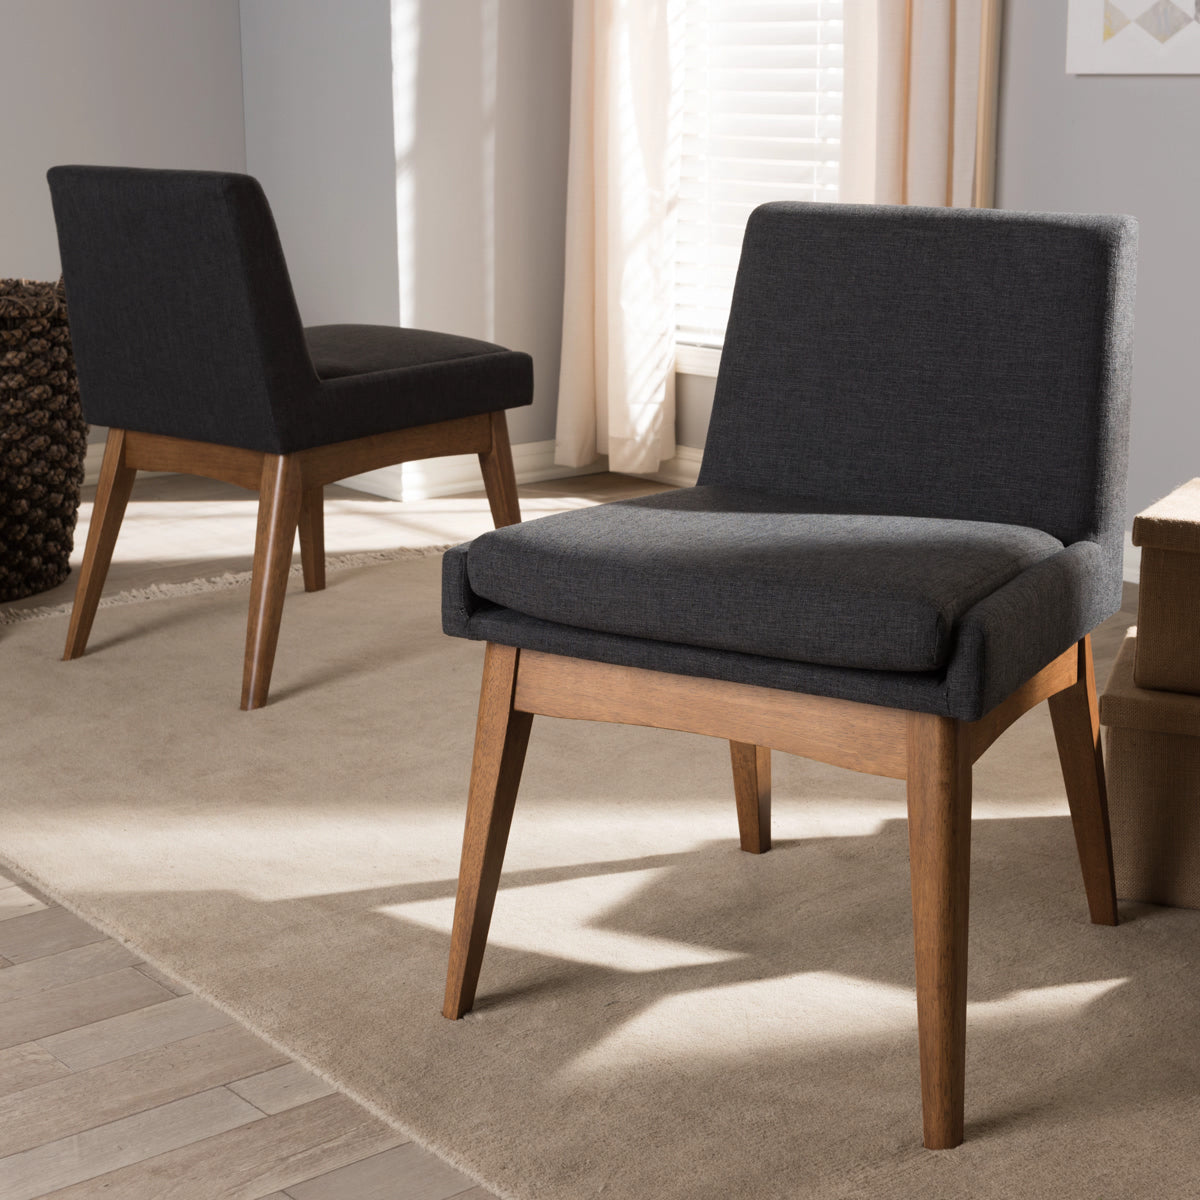 Baxton Studio Nexus Mid-Century Modern Walnut Wood Finishing Dark Fabric Dining Side Chair (Set of 2) Baxton Studio-dining chair-Minimal And Modern - 1